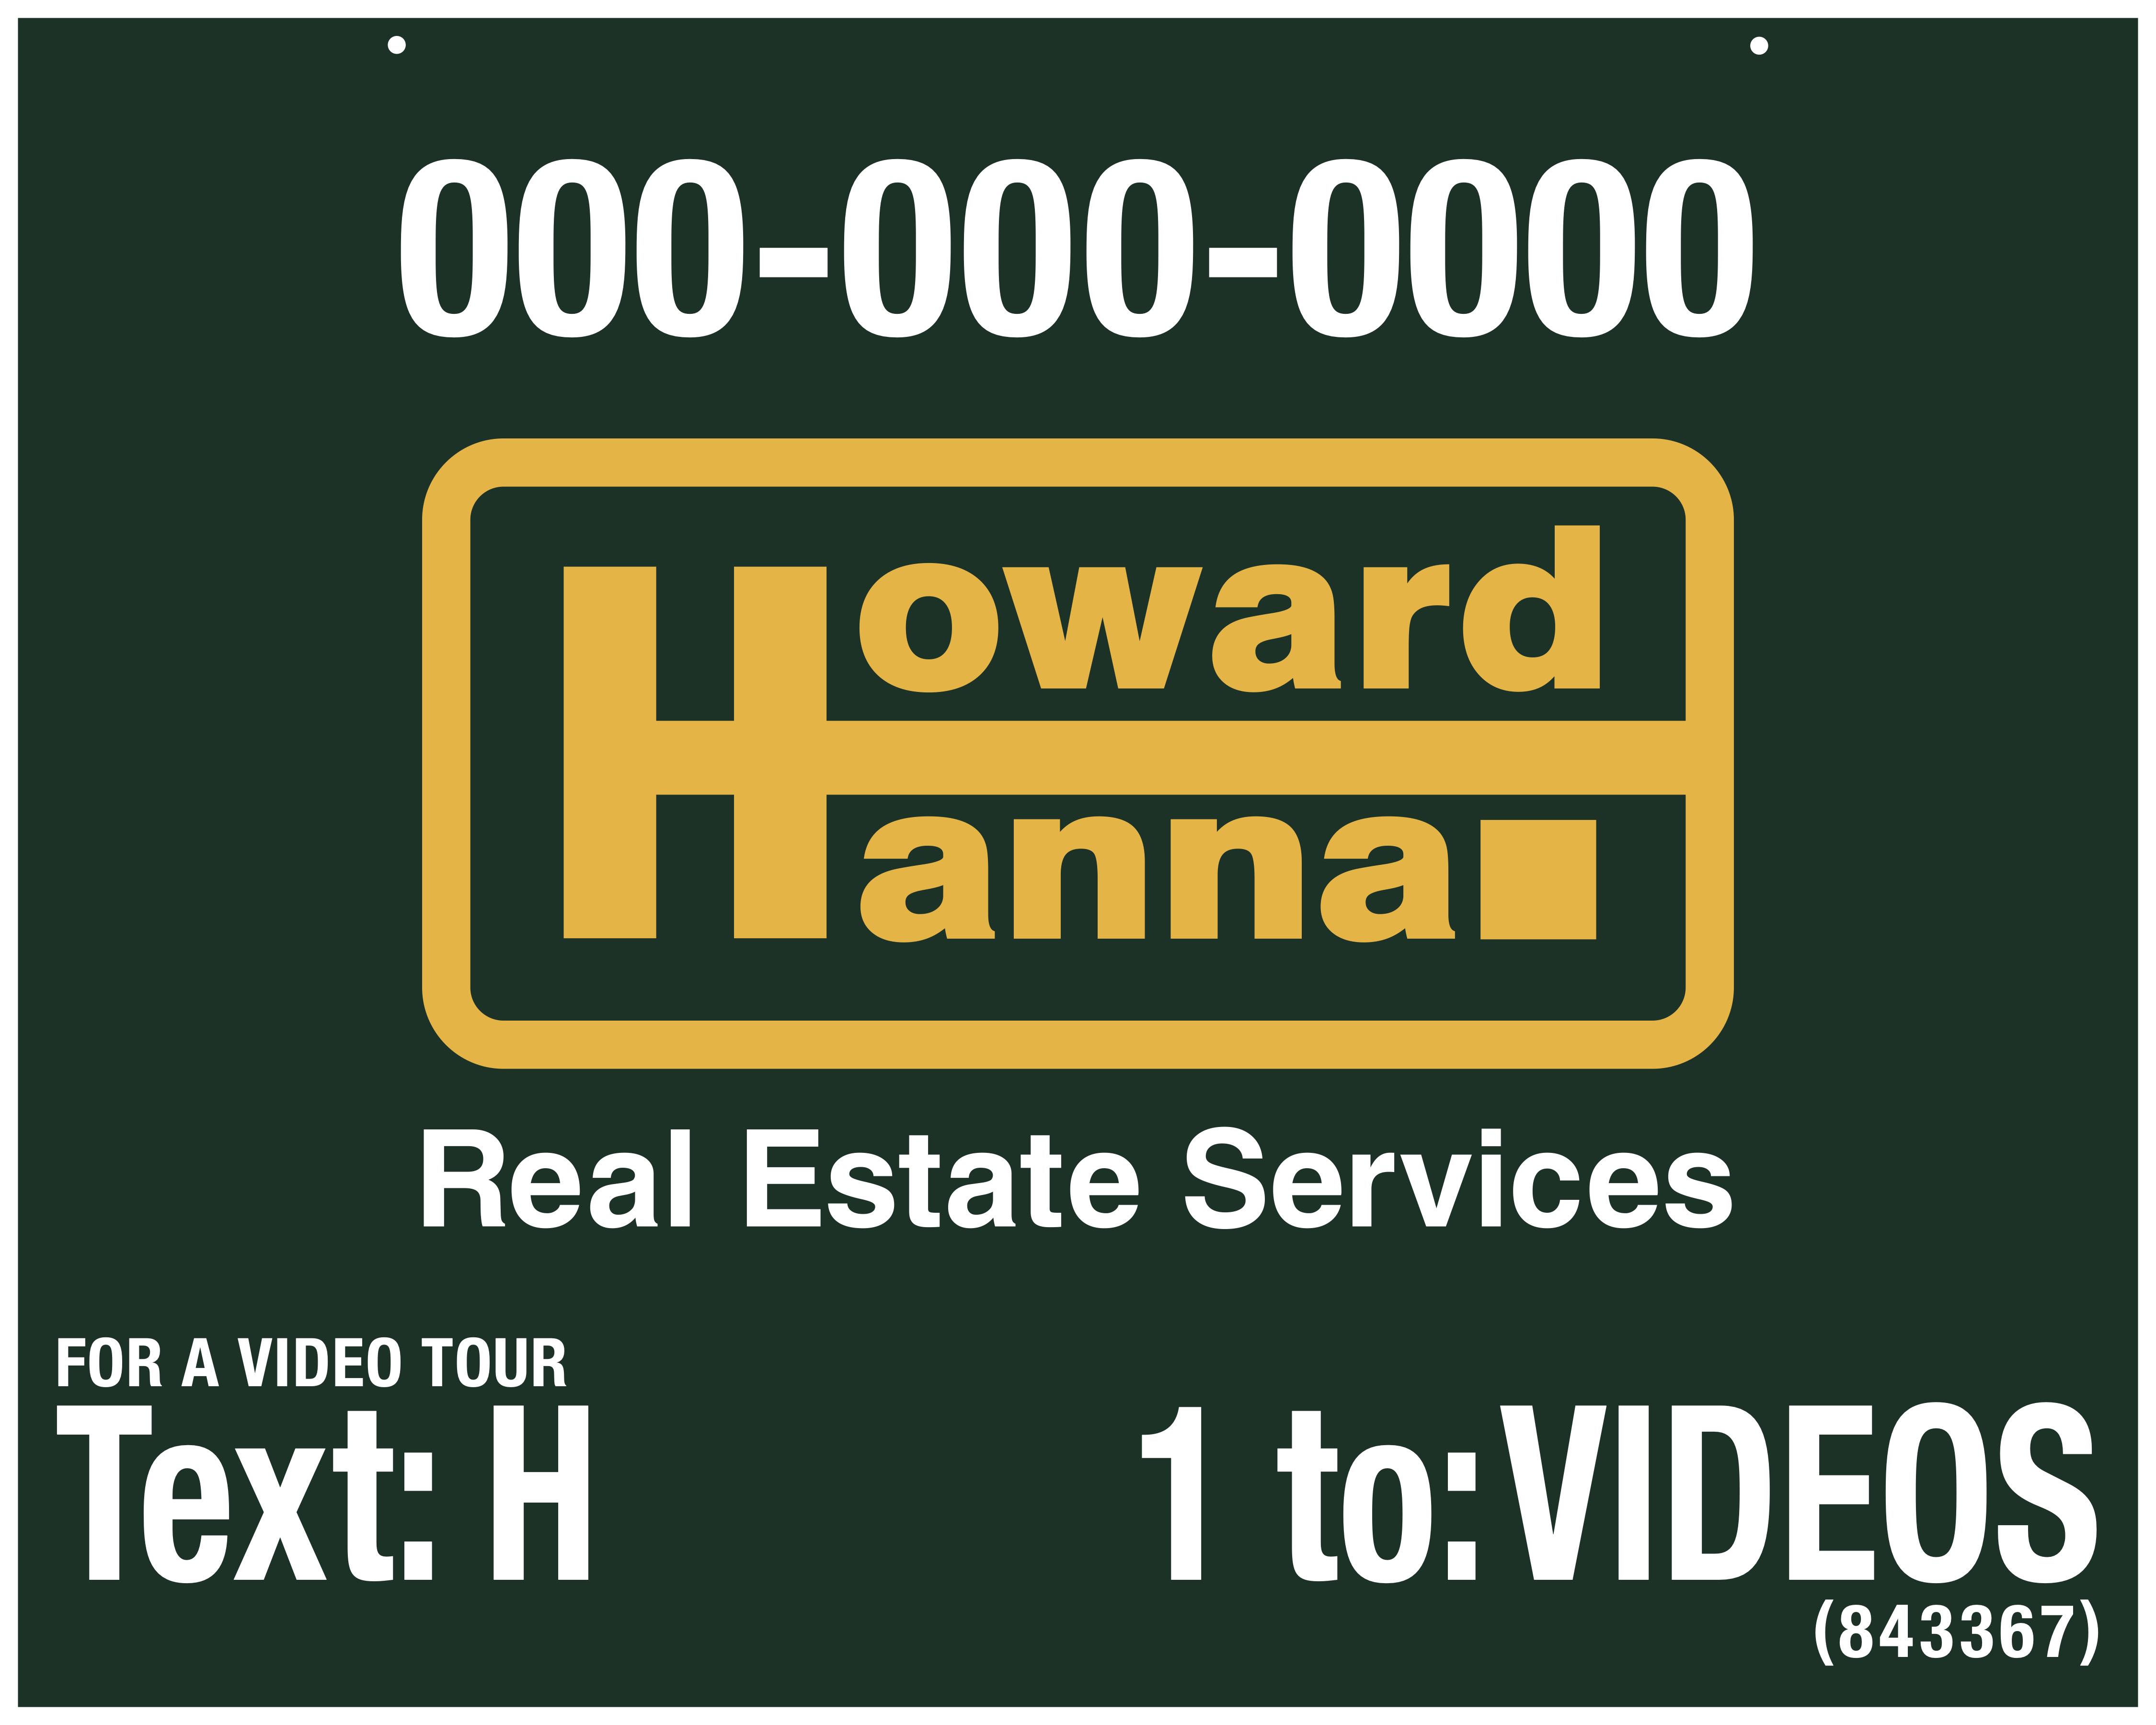 Custom Howard Hanna Real Estate Signage by Bokland Custom Visuals